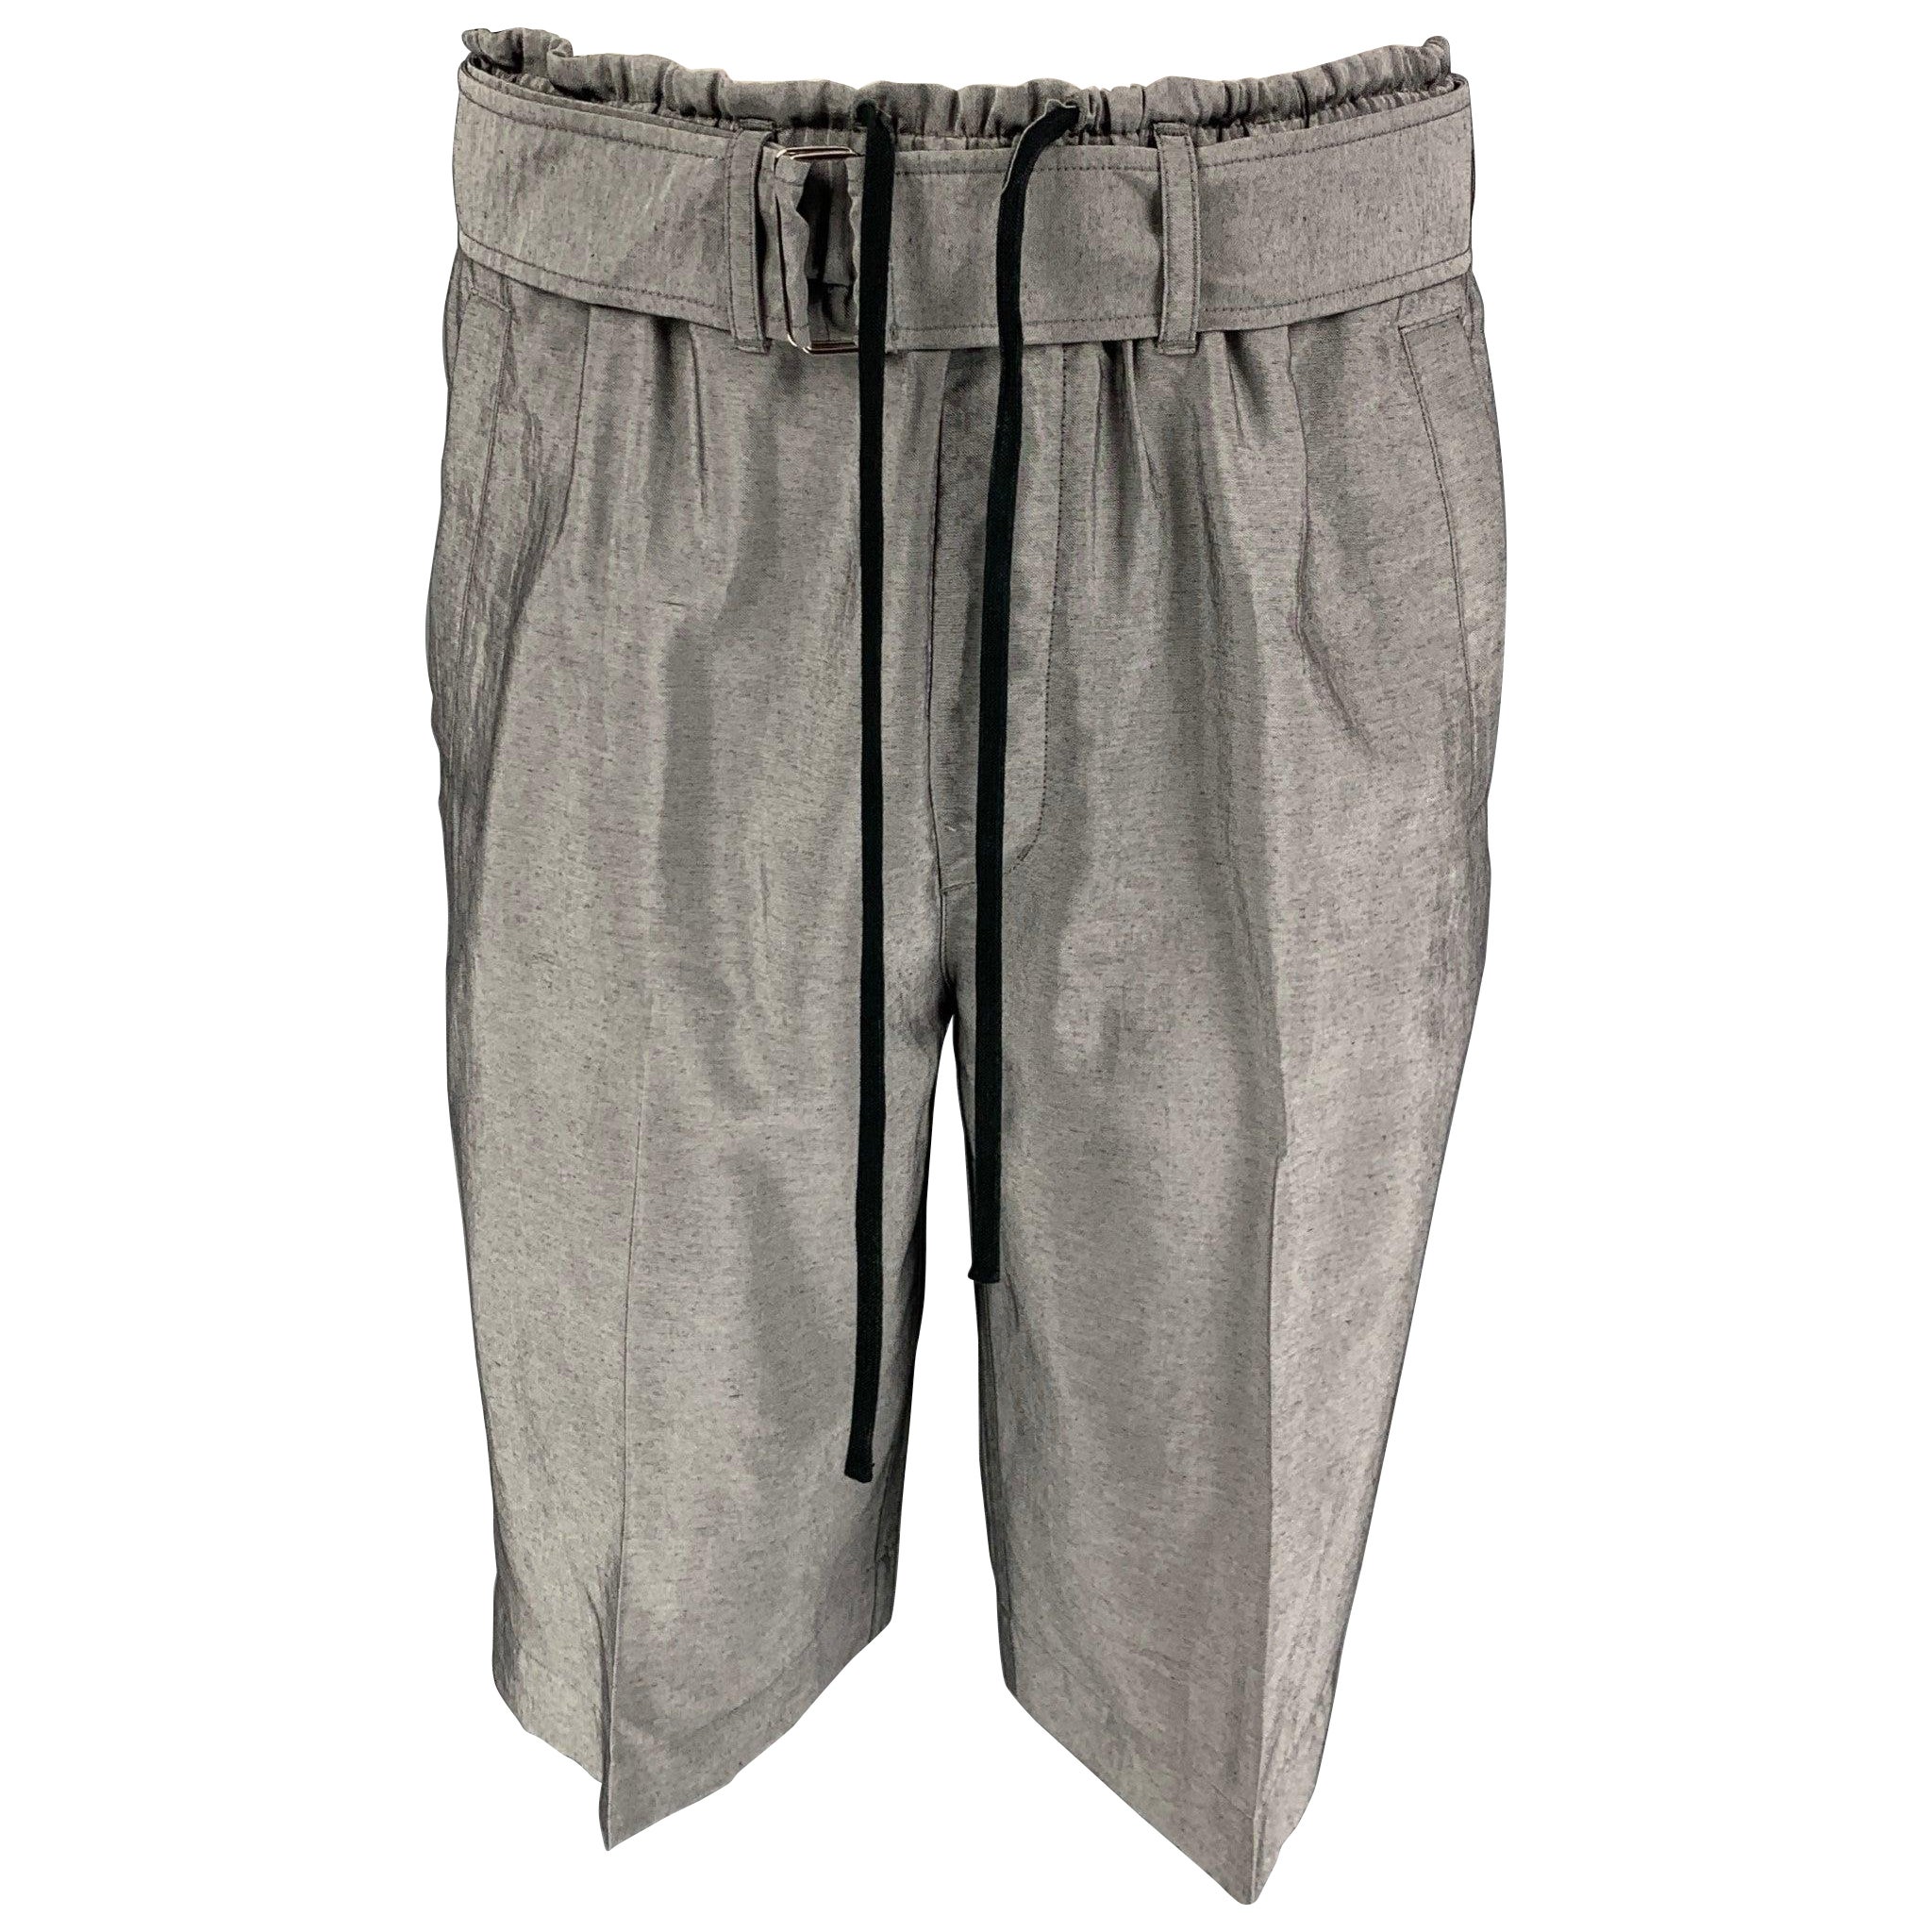 3.1 PHILLIP LIM Size 31 Silver Viscose Blend Belted Shorts For Sale